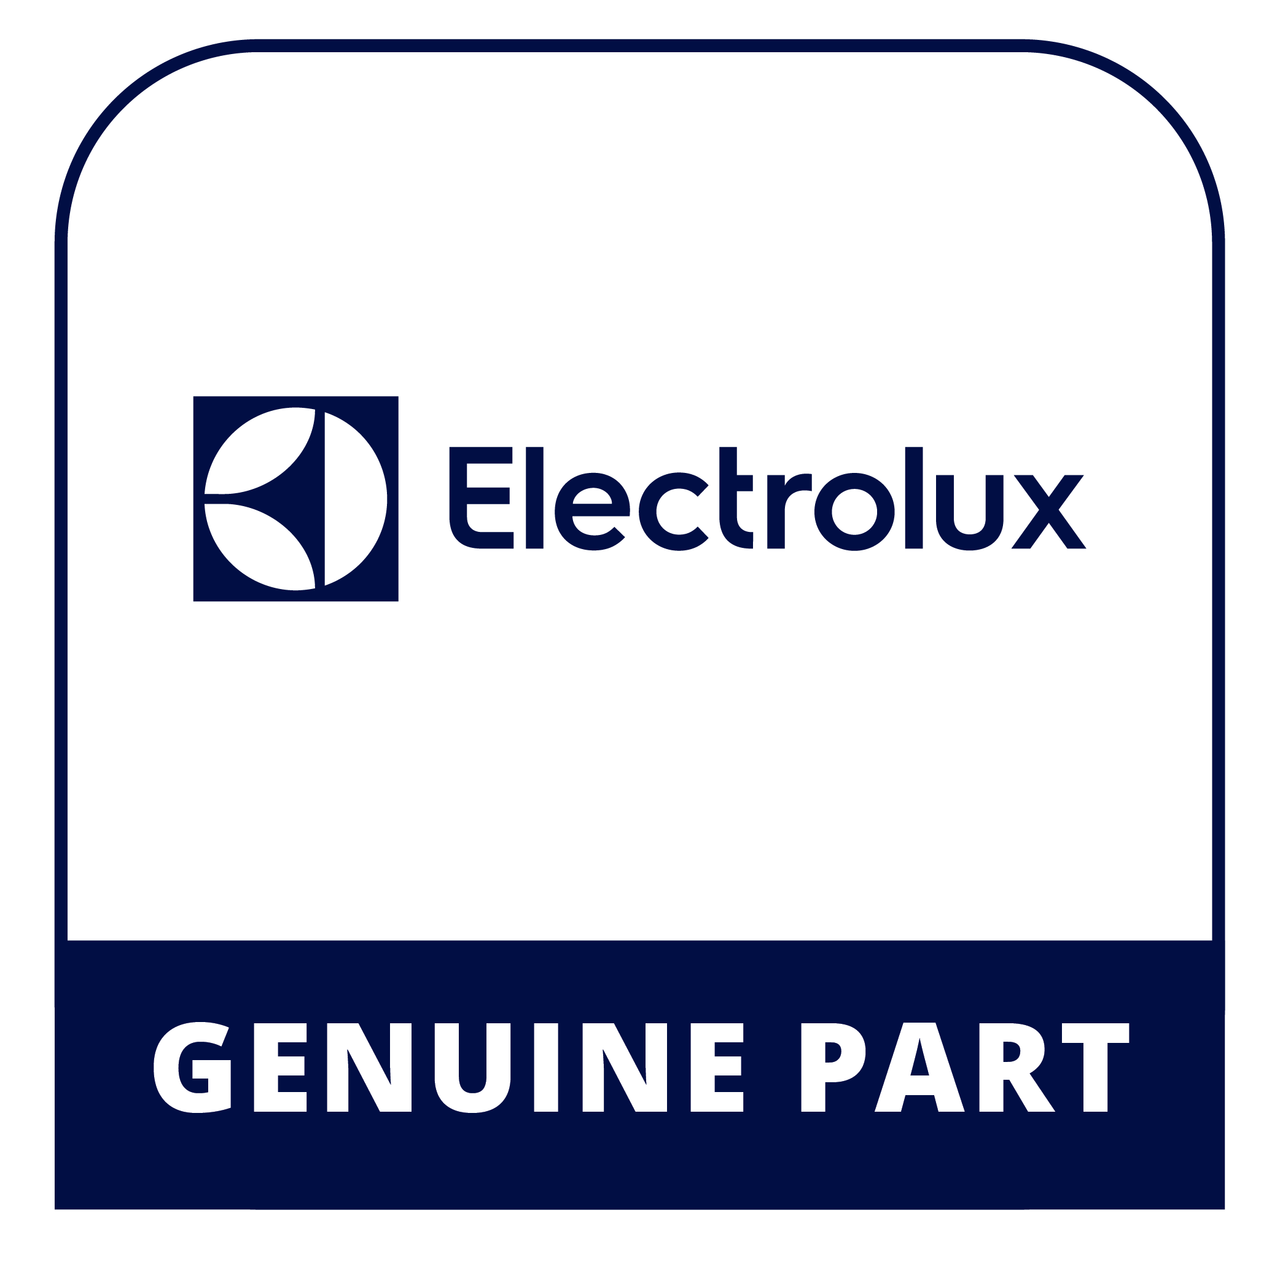 Frigidaire - Electrolux 318221650 Grate 2=1 - Genuine Electrolux Part